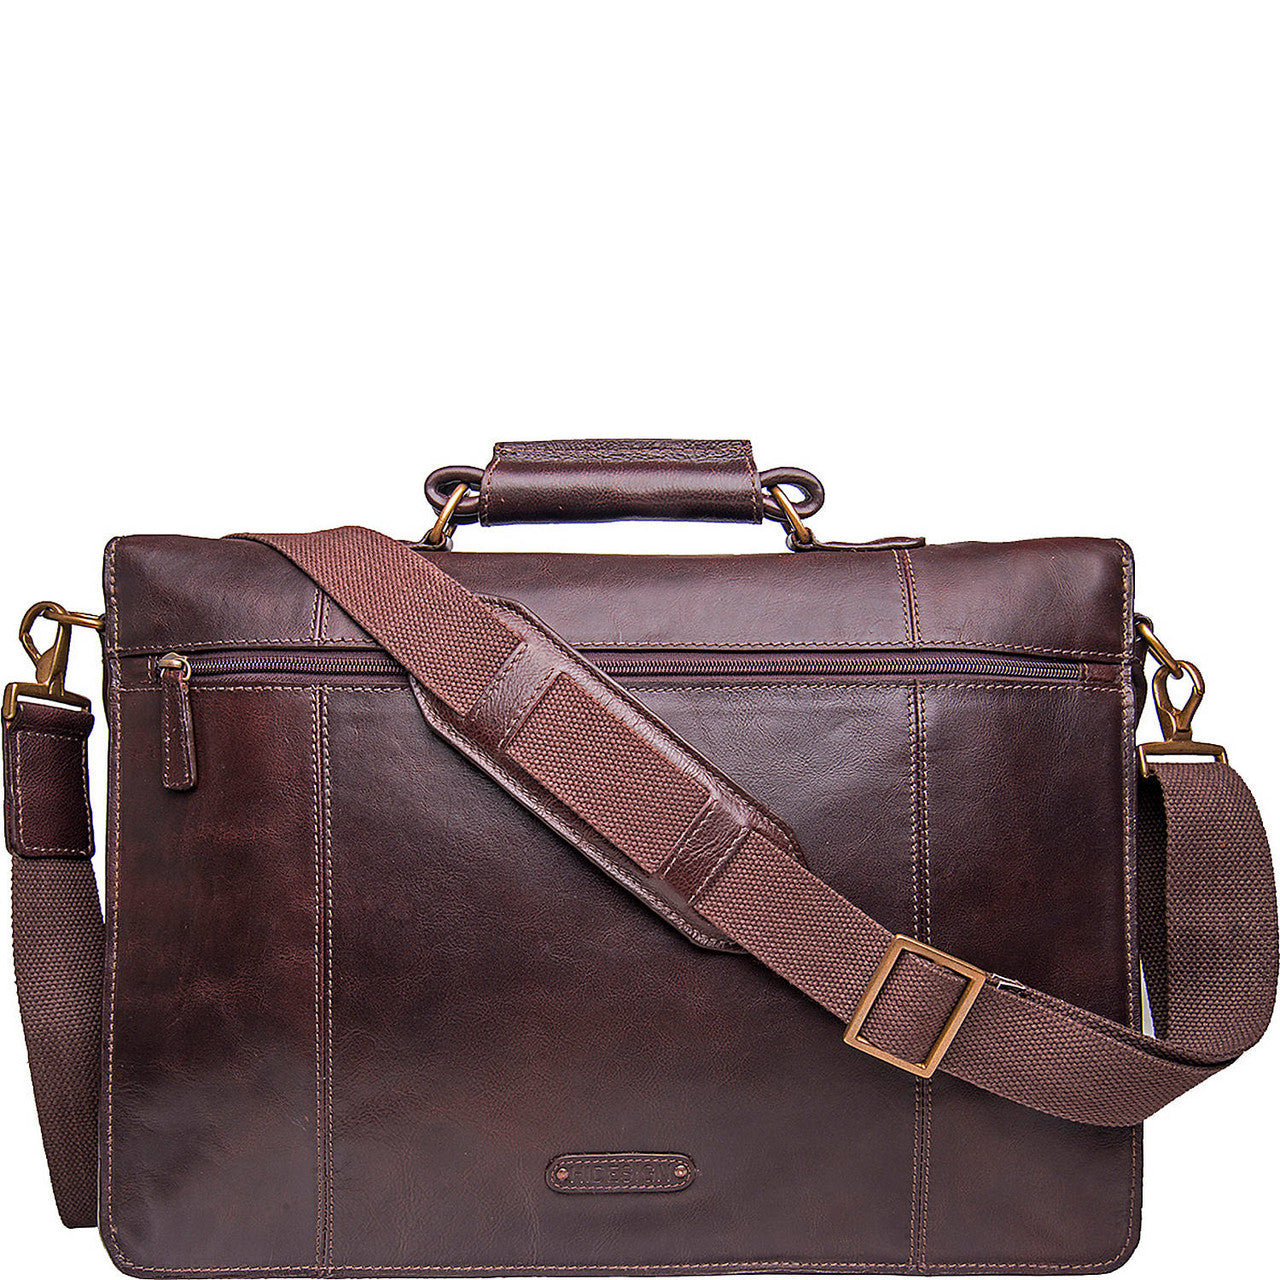 Parker Large Briefcase - Leather Loom